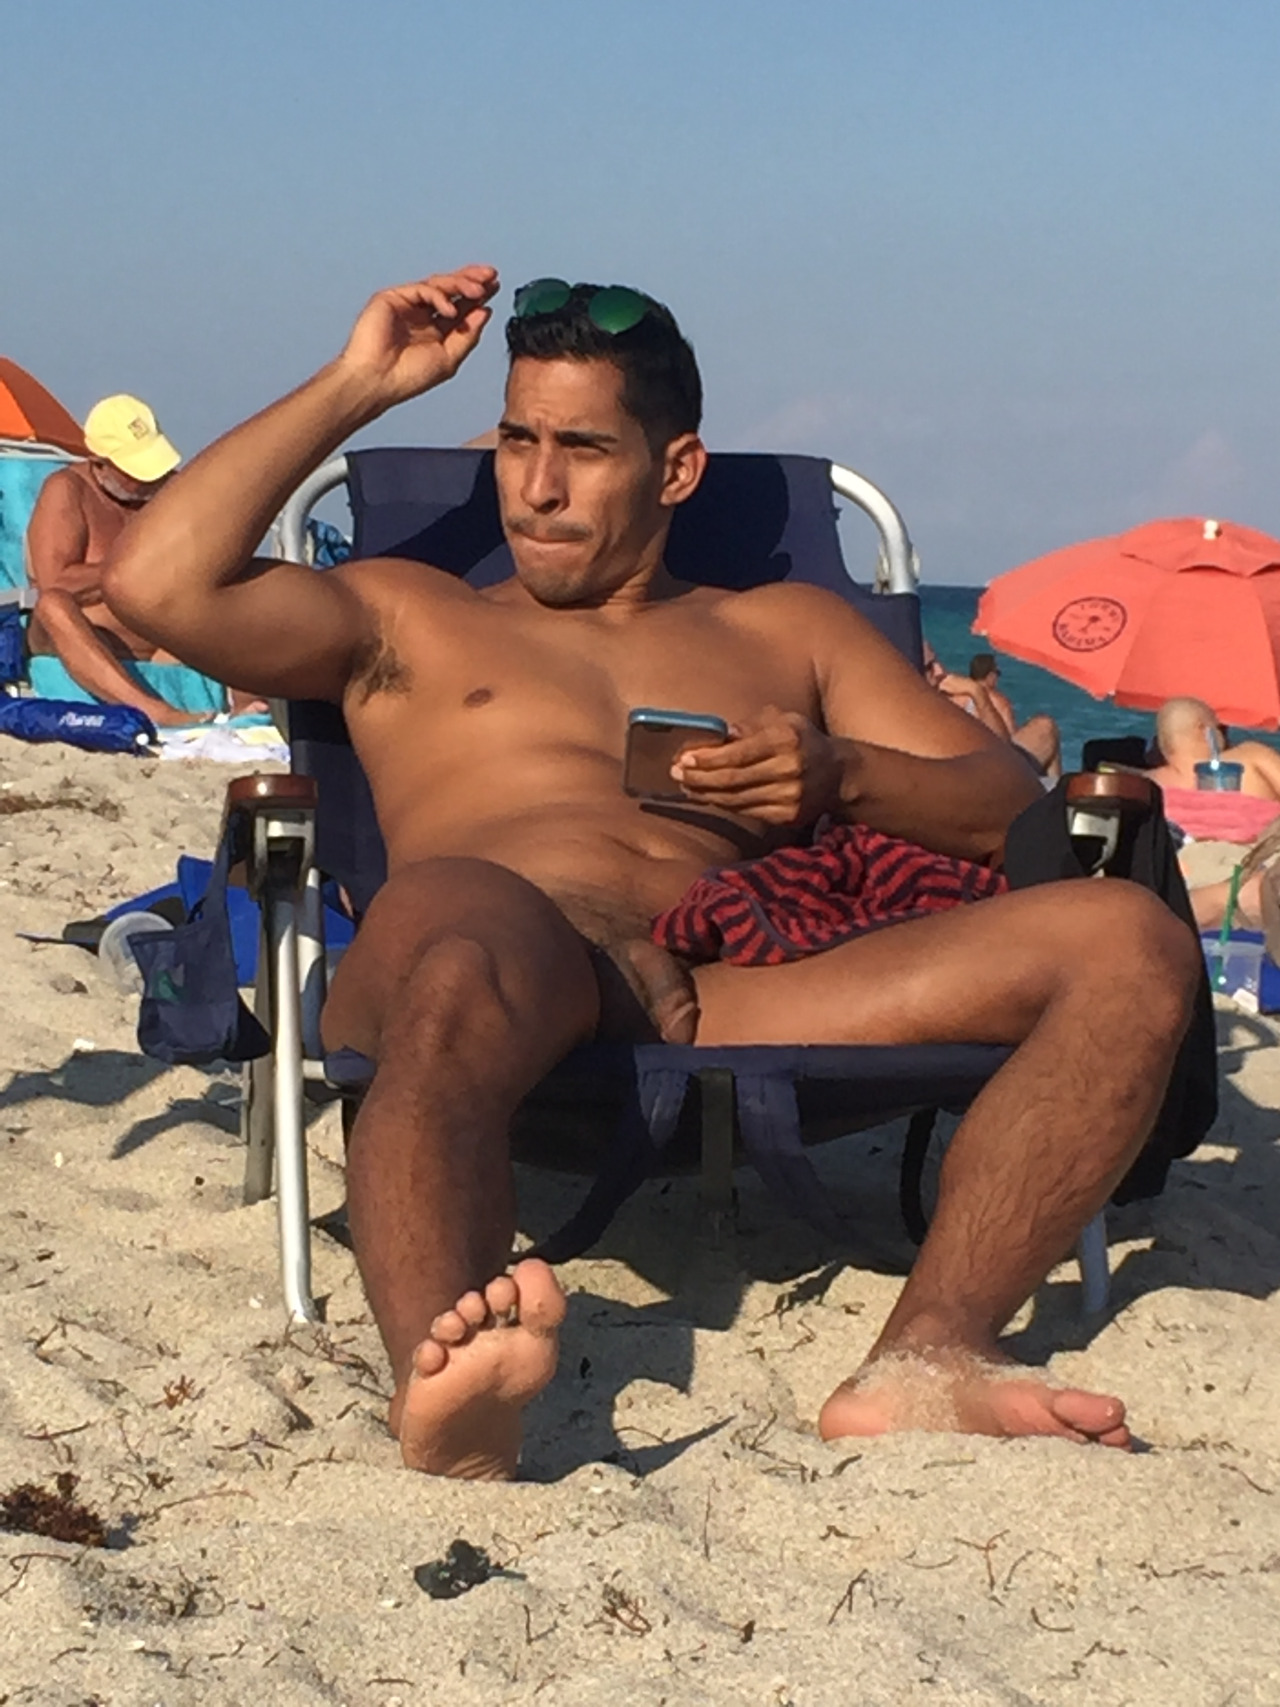 Tampa Nude Beach - Hung men at nude beaches